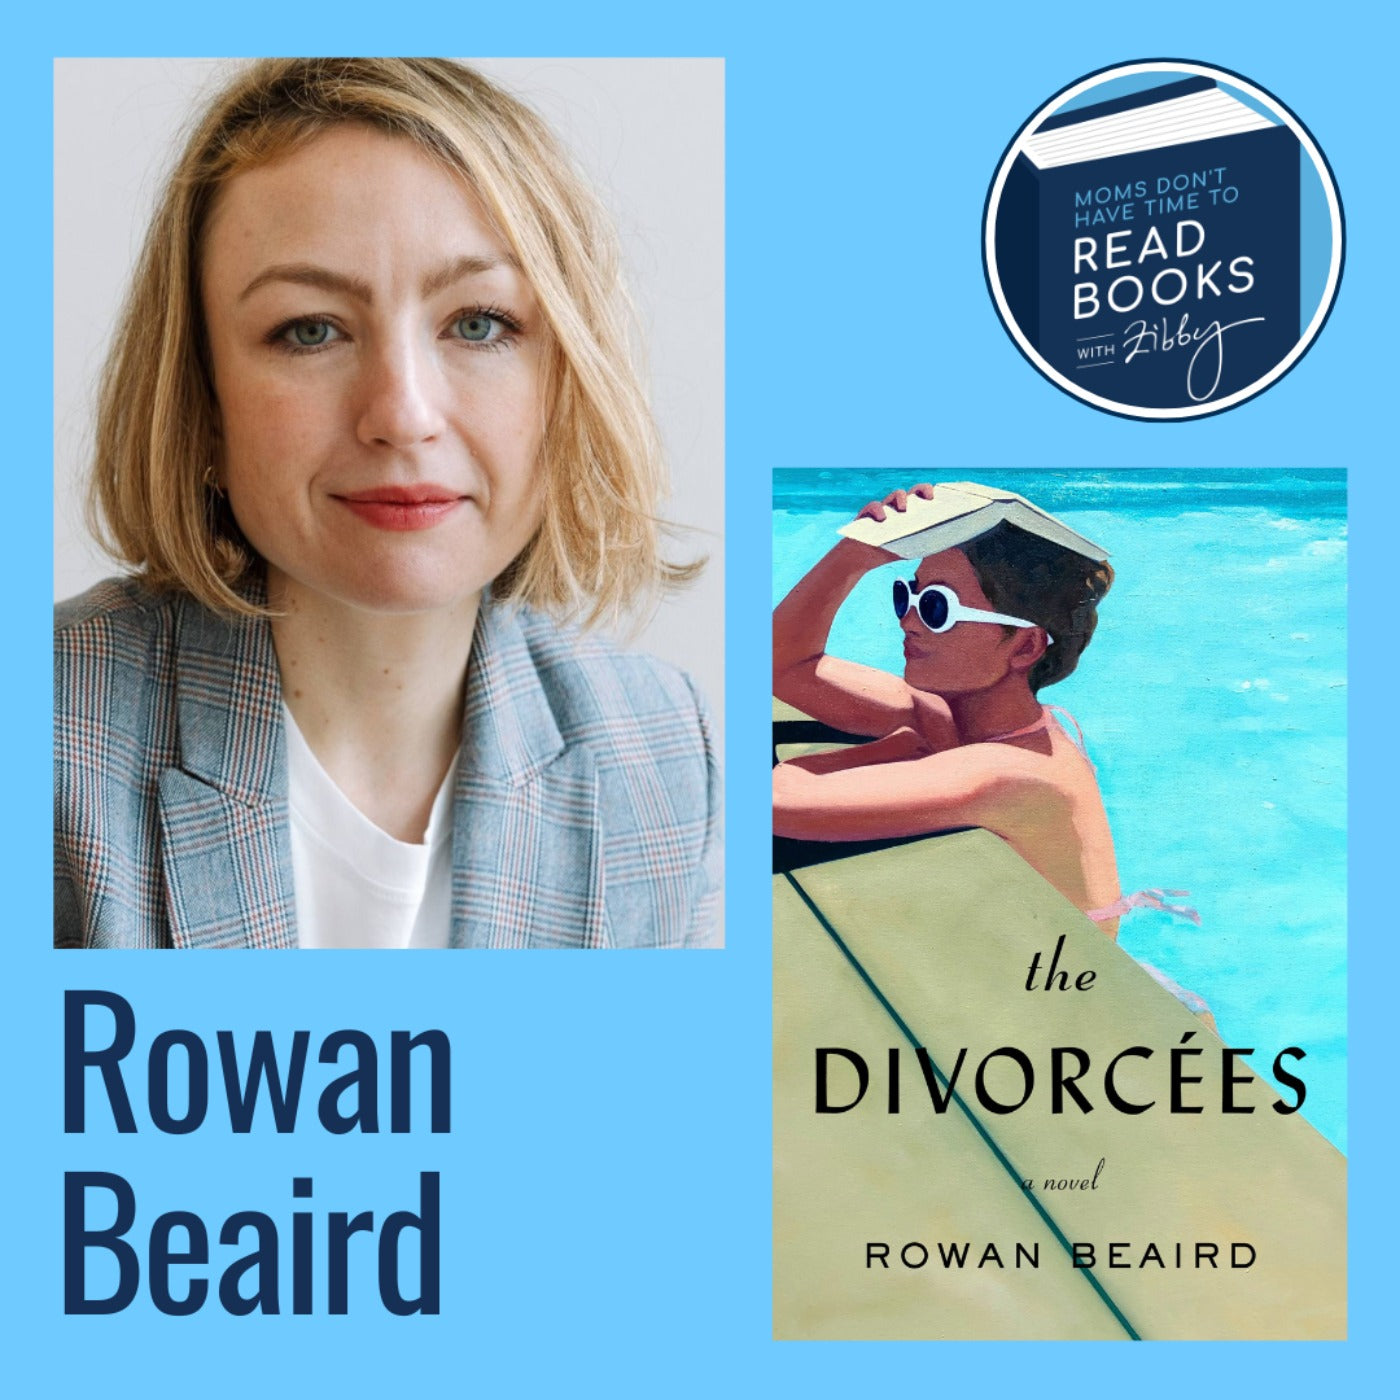 Rowan Beaird, THE DIVORCEES